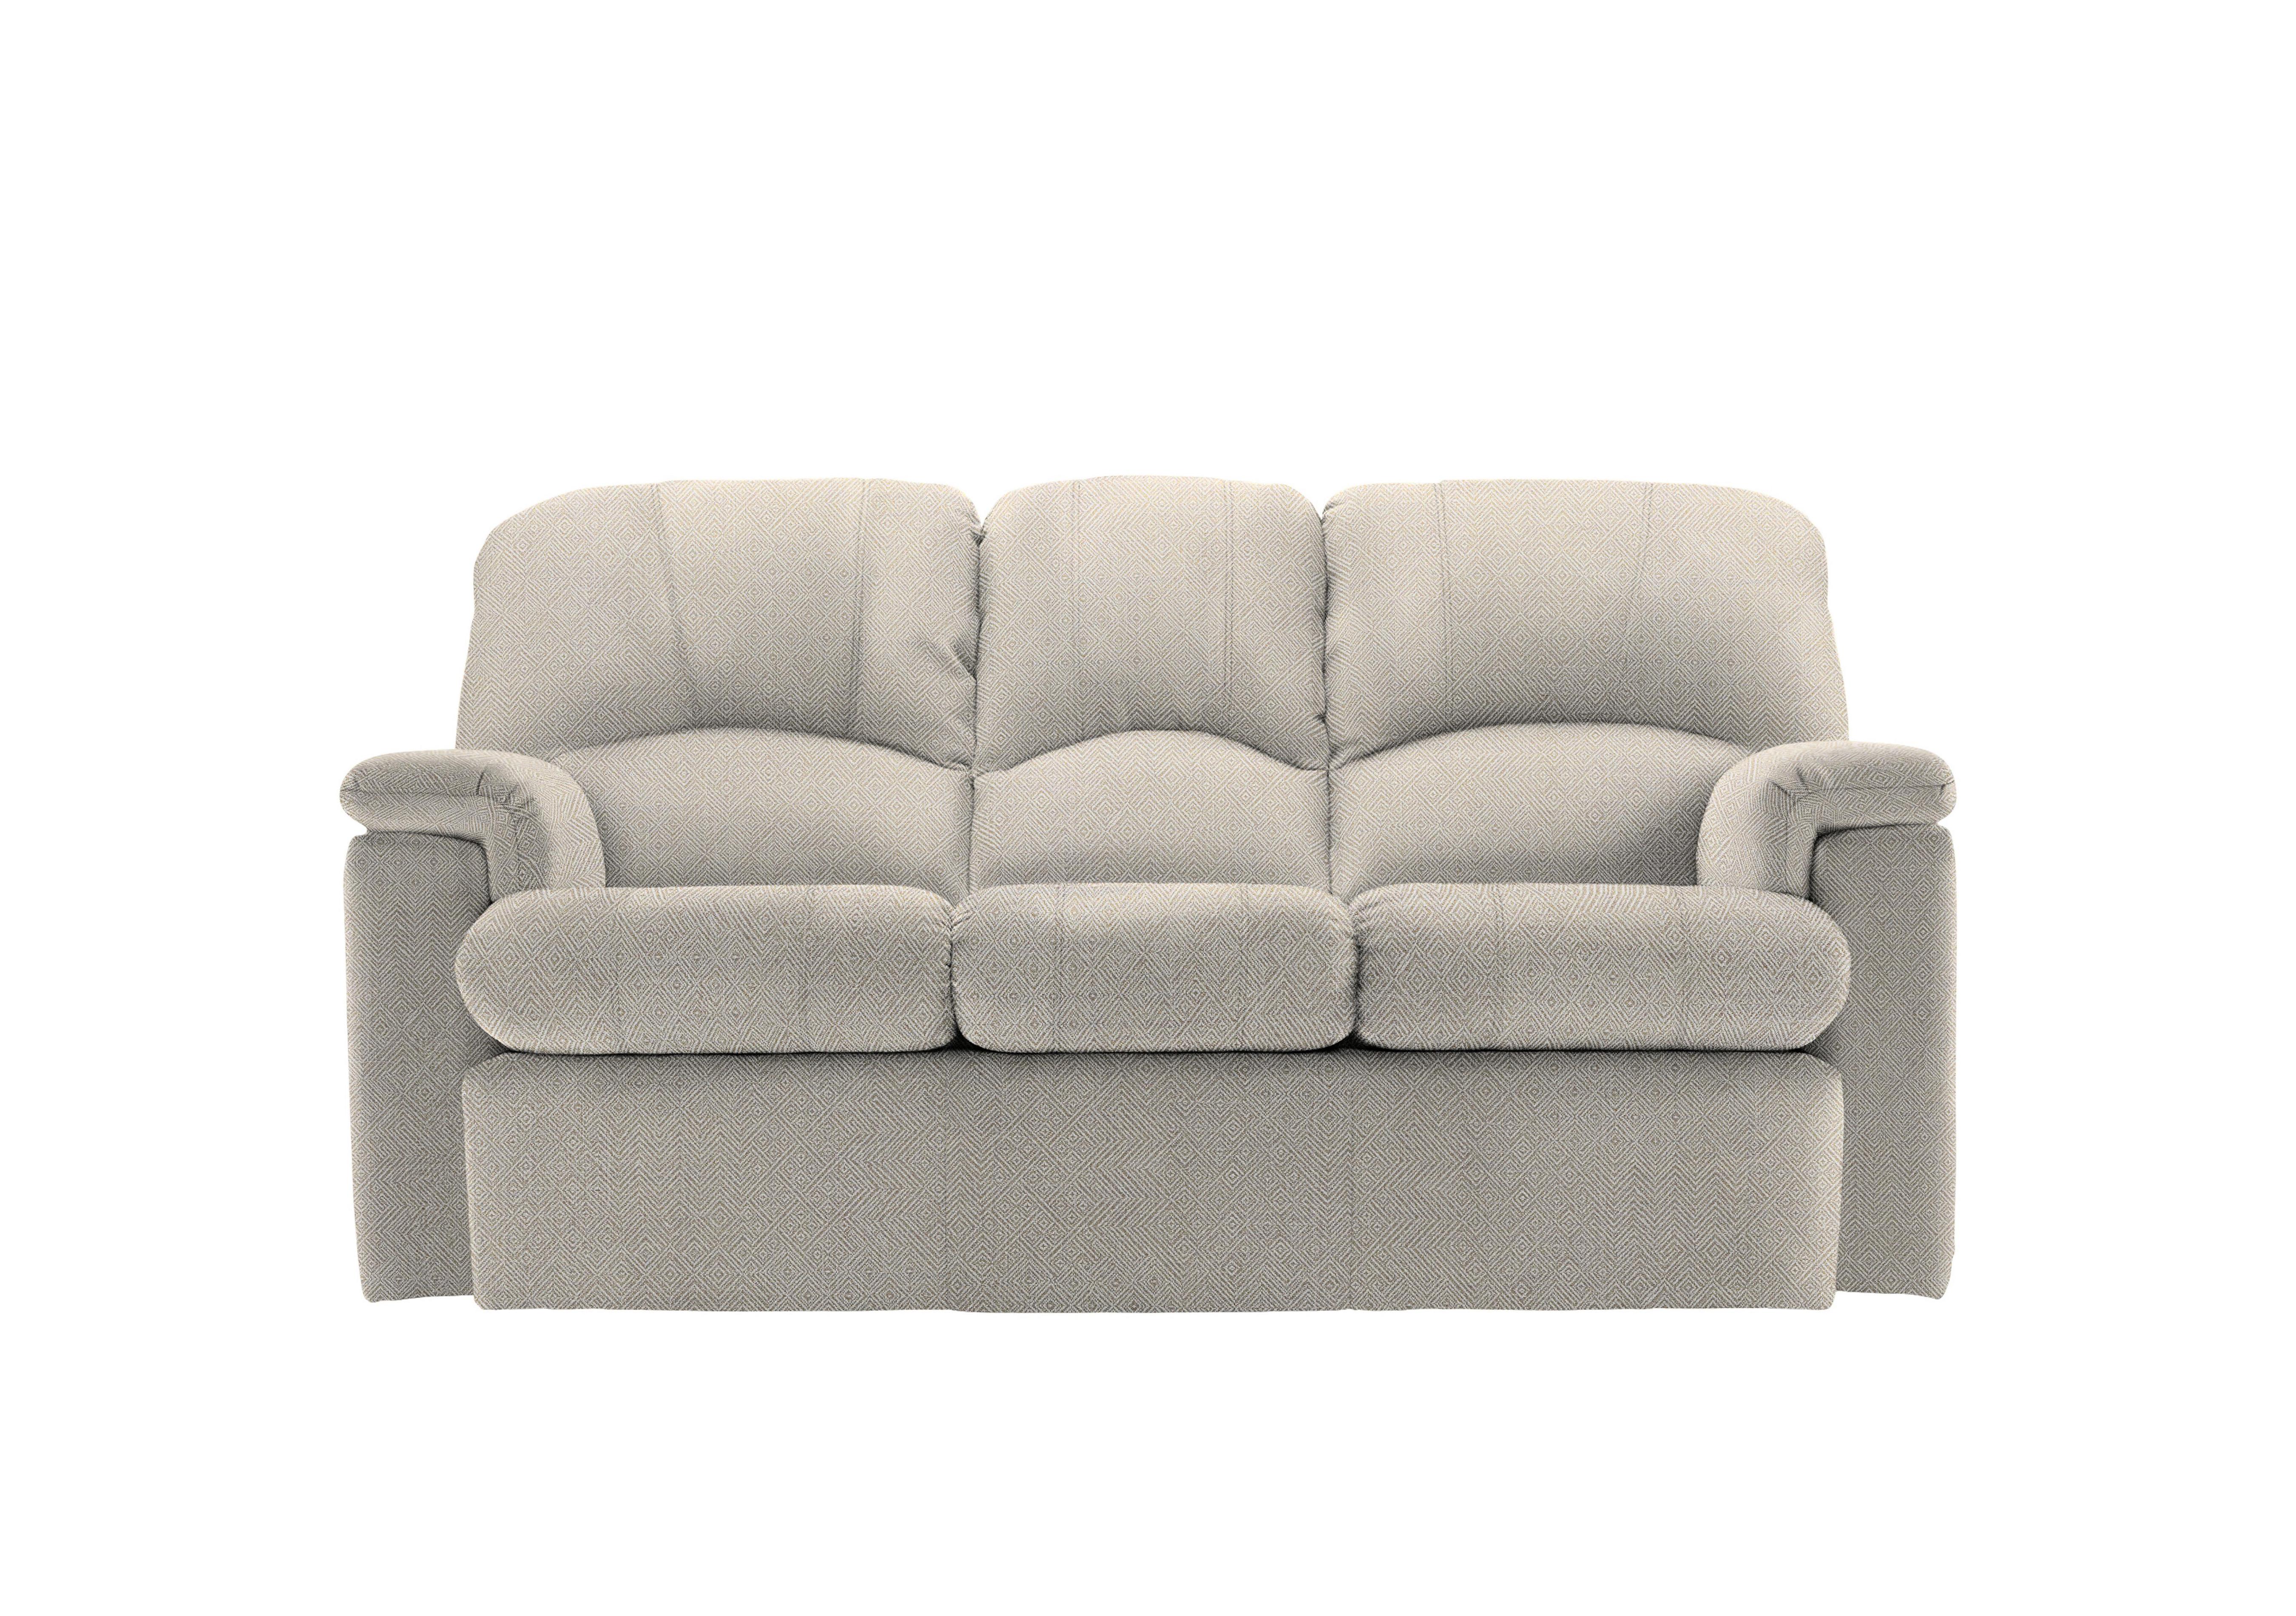 Chloe Small Fabric 3 Seater Sofa in B011 Nebular Blush on Furniture Village